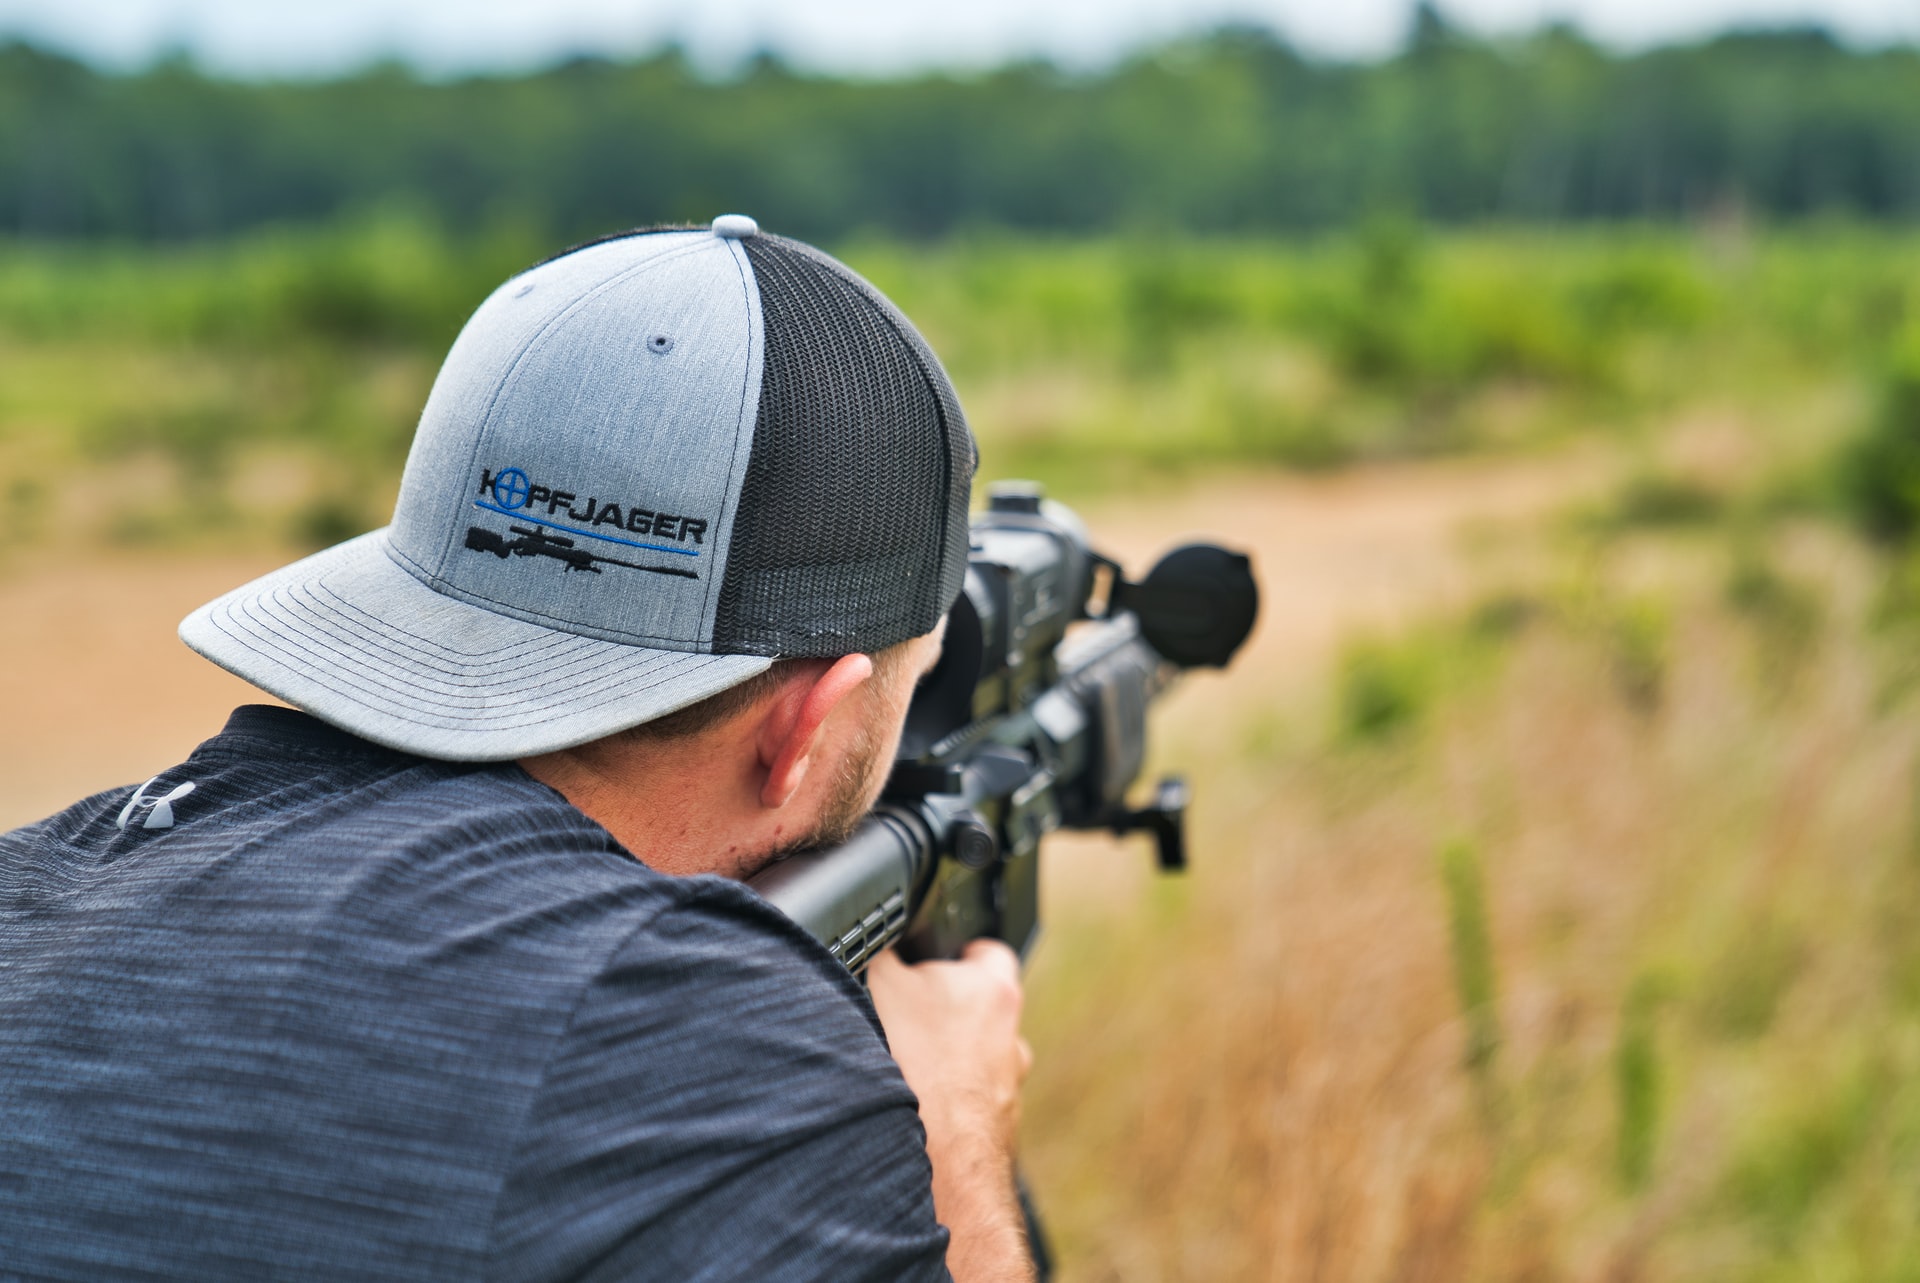 how to sight in a slug gun scope